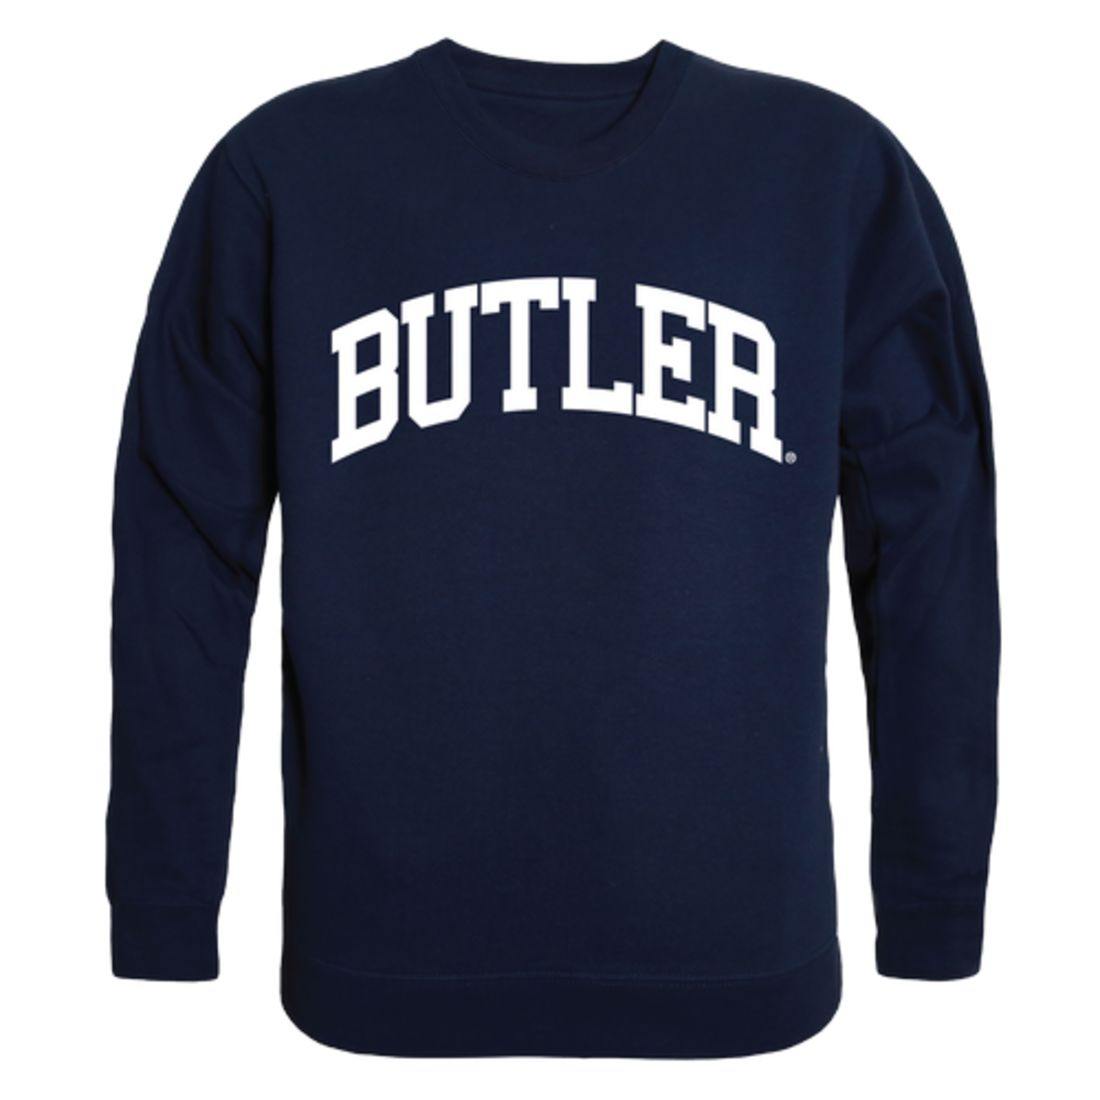 Butler University Bulldog Arch Crewneck Pullover Sweatshirt Sweater Navy-Campus-Wardrobe